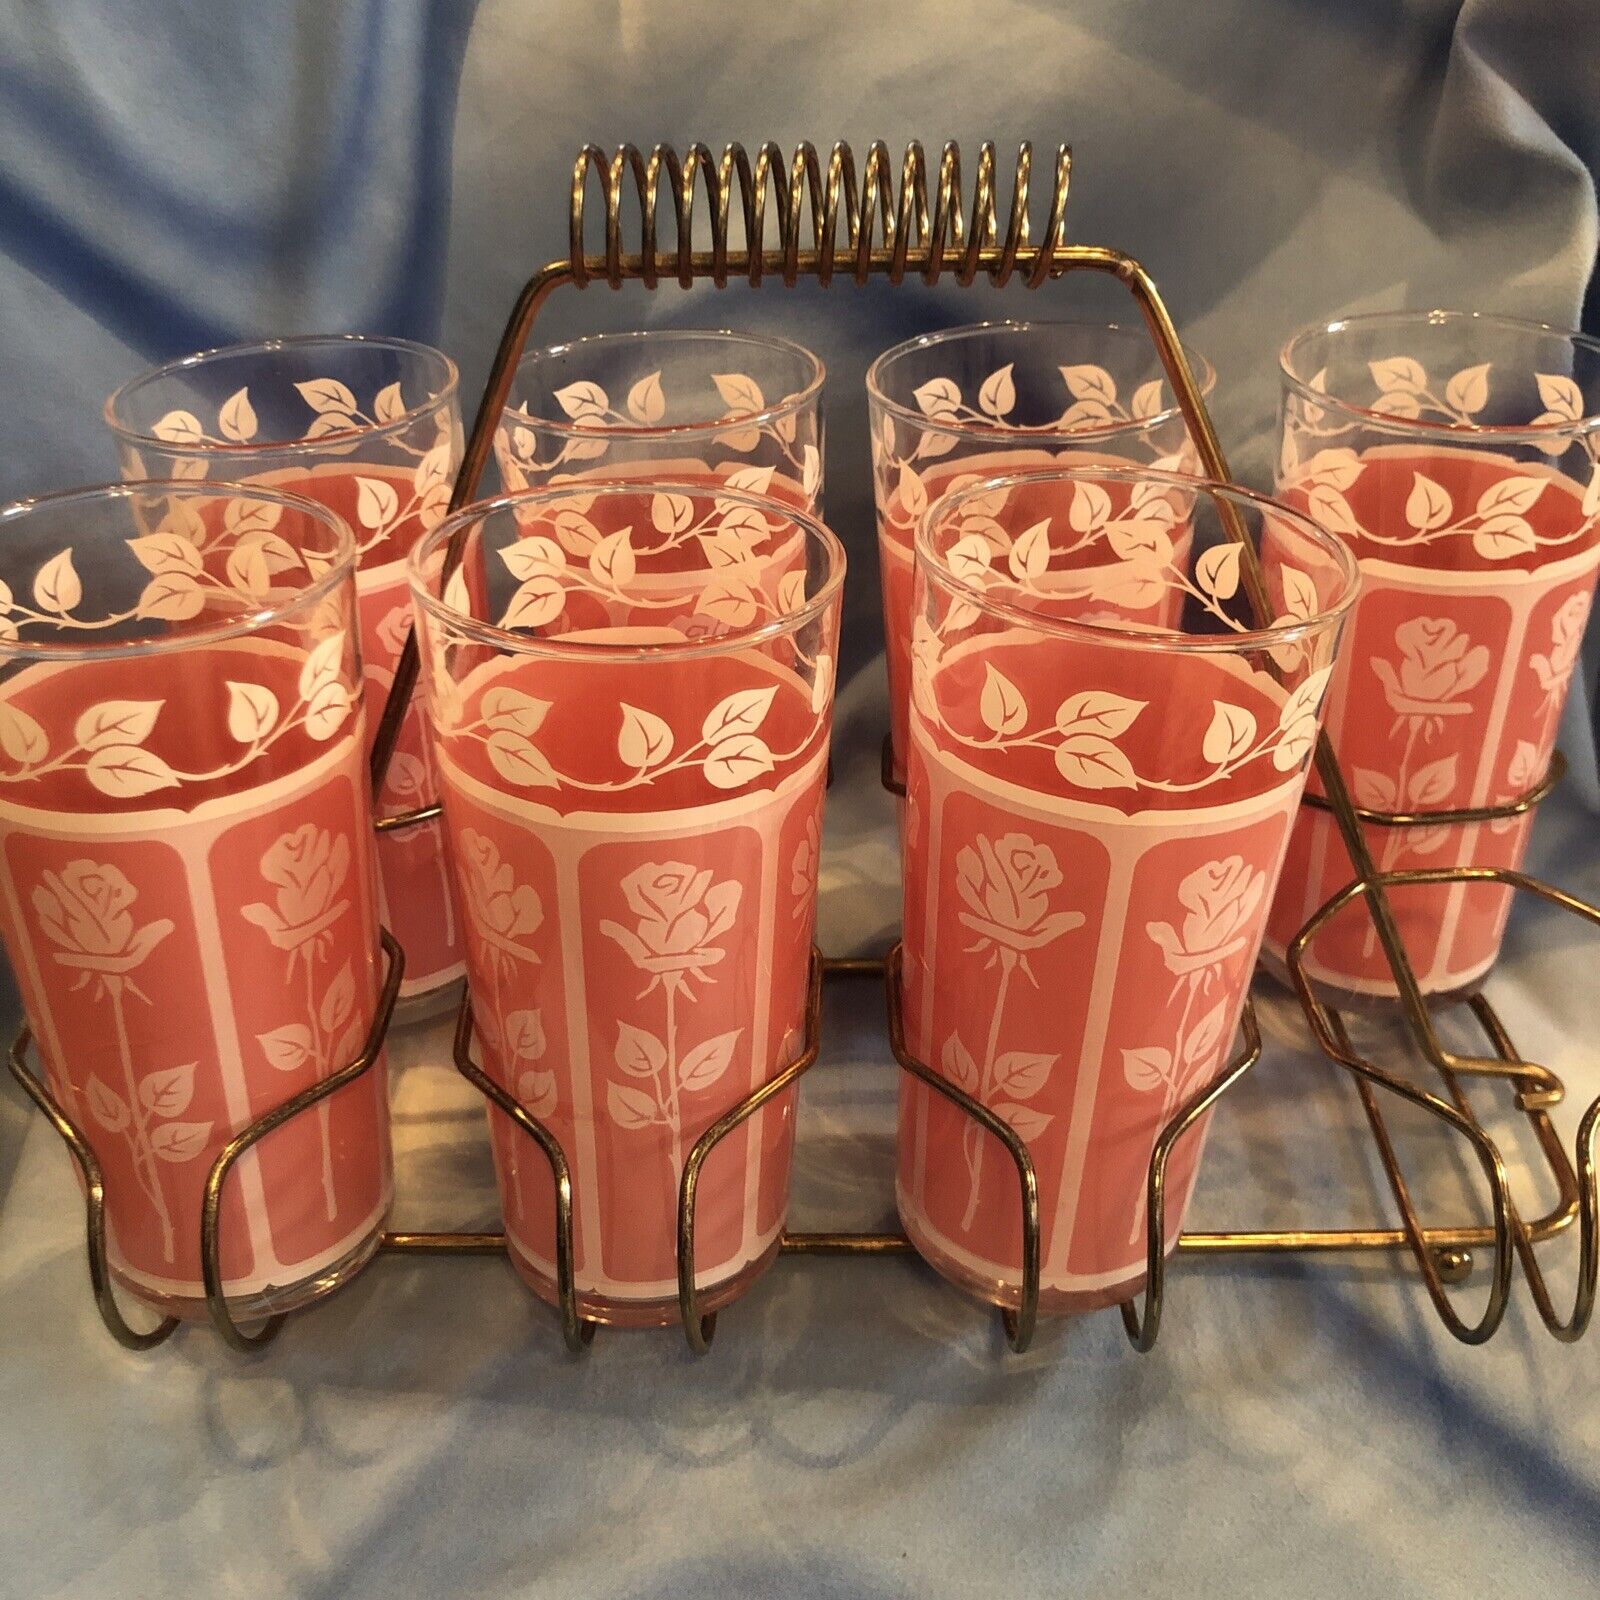 Vintage pink frosted glasses floral print 7 glasses with holder